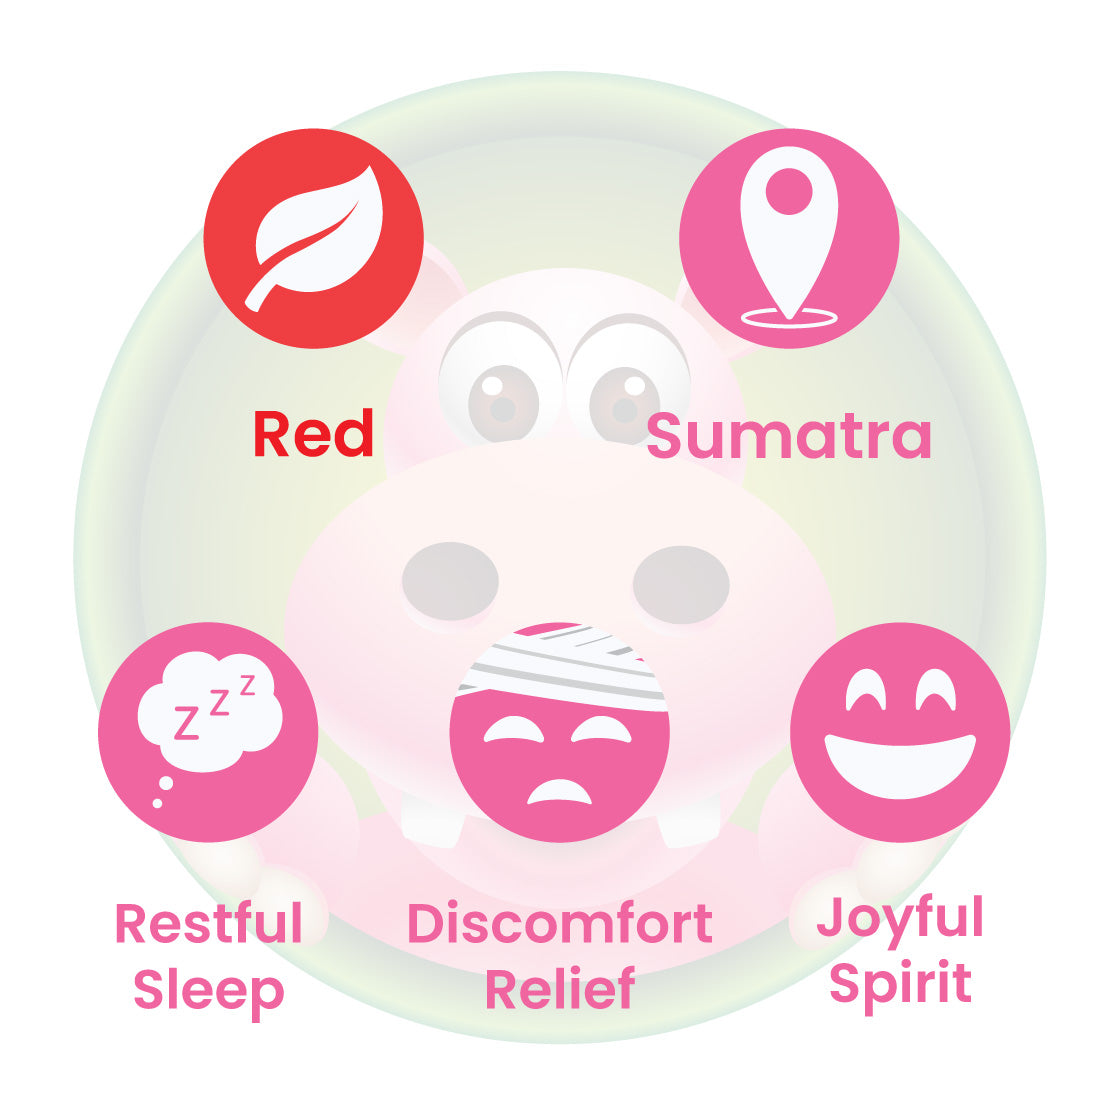 Infographic Details for Happy Hippo Red Vein Sumatra Kratom Powder. Leaf color: Red Vein. Kratom Strain Origin: Sumatra. Kratom Effects resonate with Restful Sleep, Joyful Spirit, and Relief From Physical Discomfort.